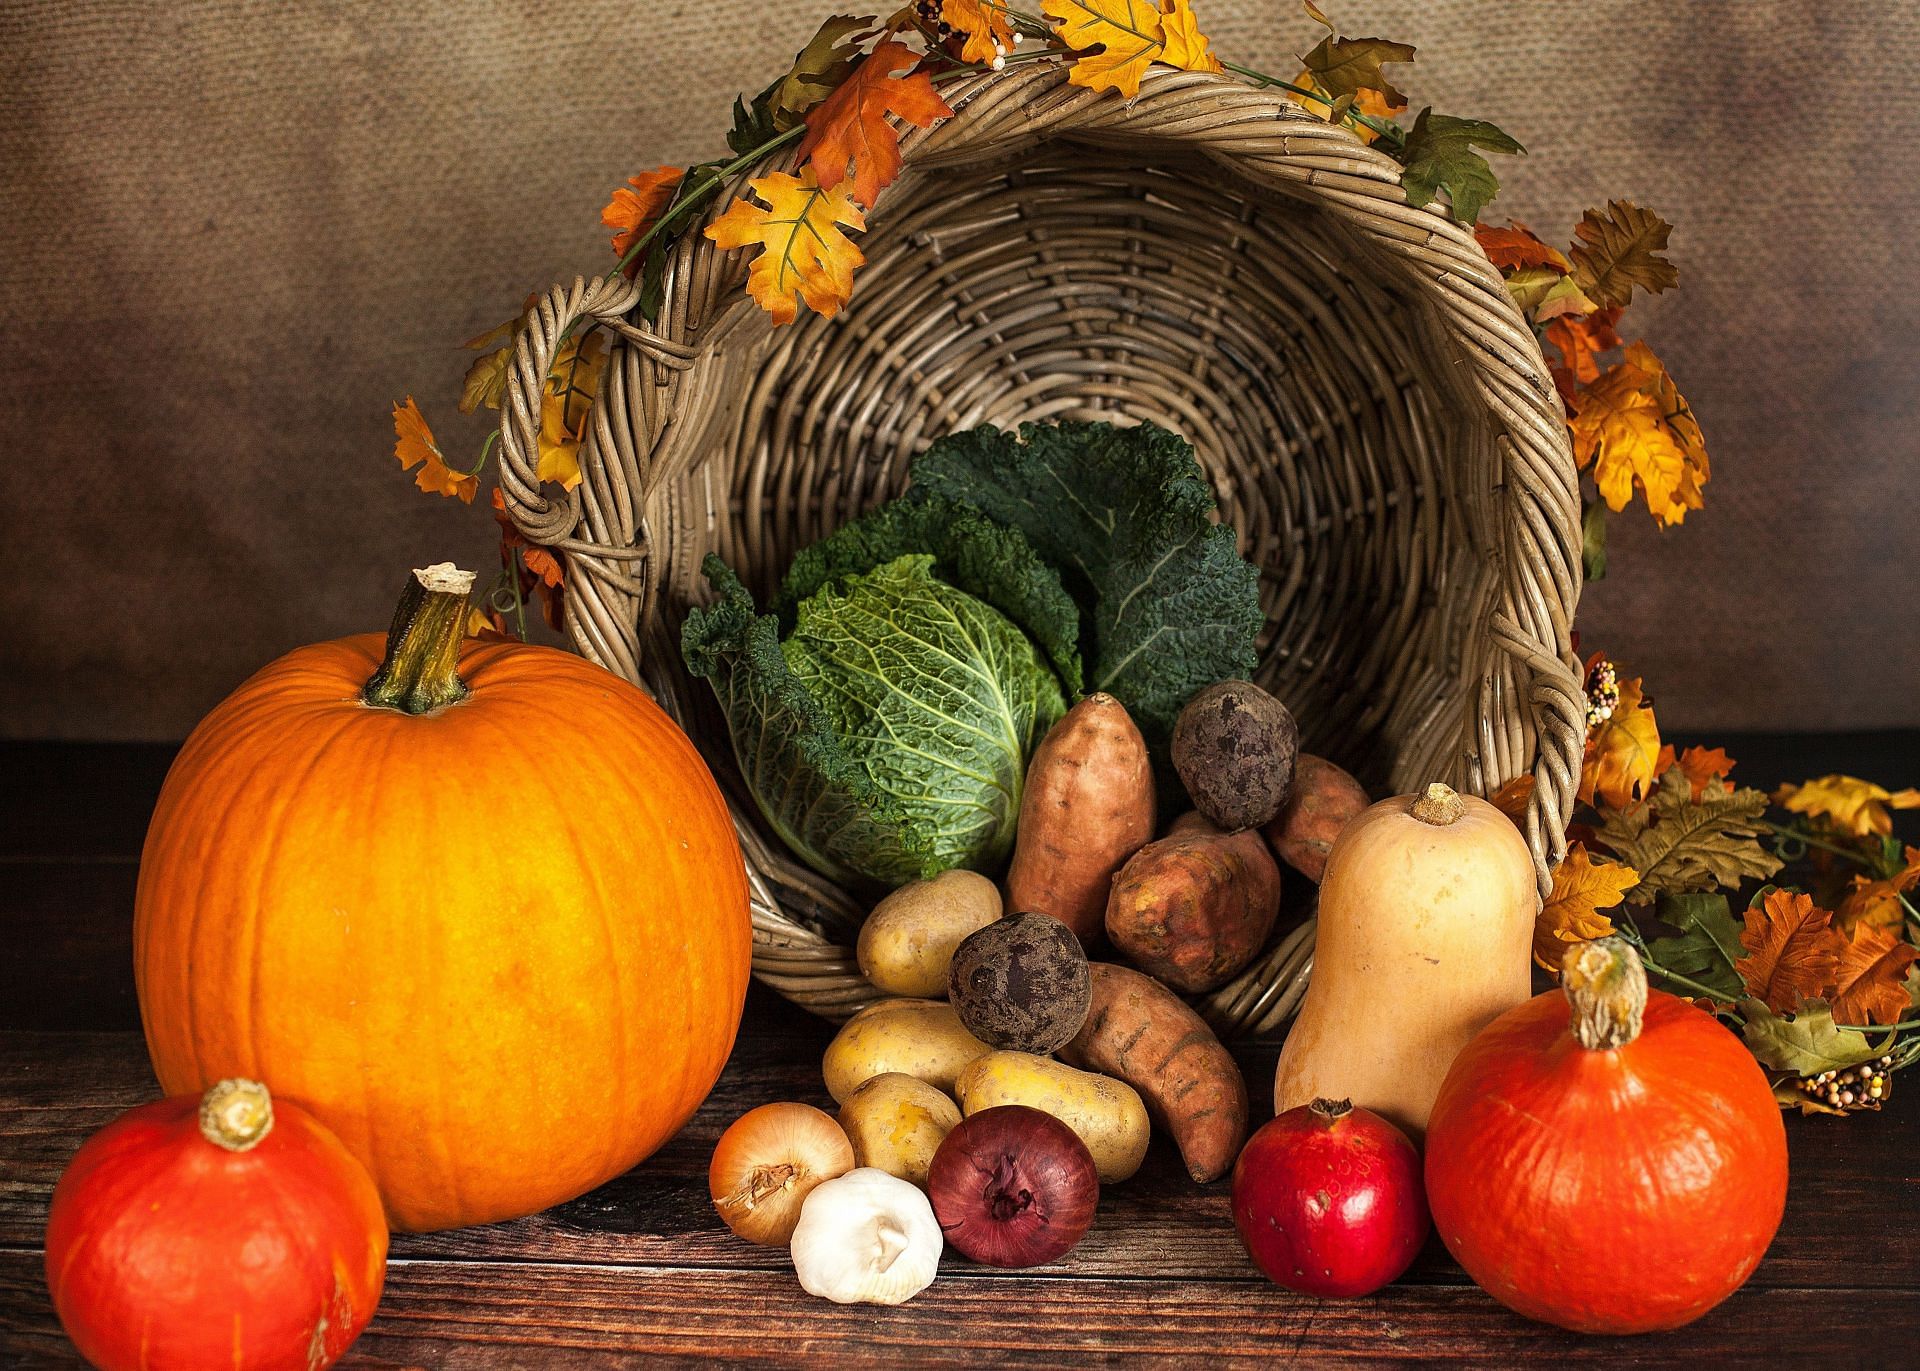 Eating fruits and vegetables boosts WBCs, strengthening the immune system (Image via Pexels/Pixabay)